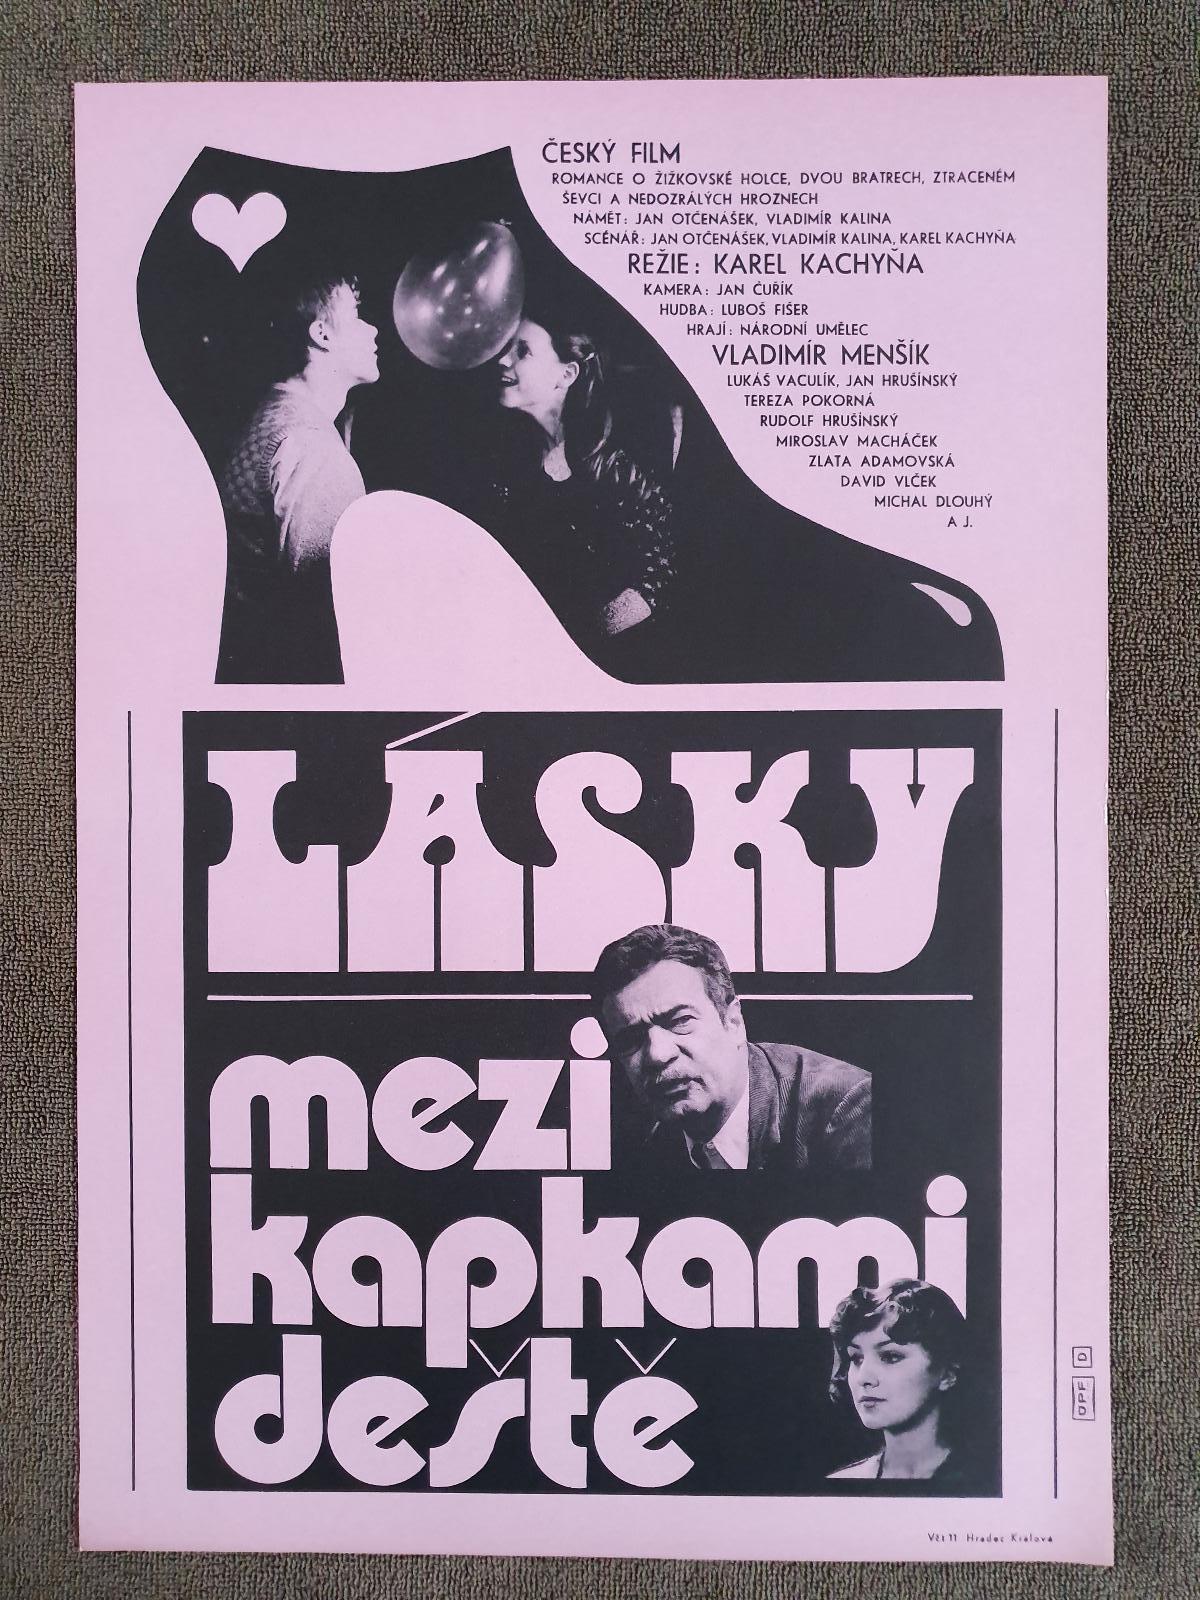 Stiahni si Filmy CZ/SK dabing  Lasky mezi kapkami deste (1979)(CZ) = CSFD 81%